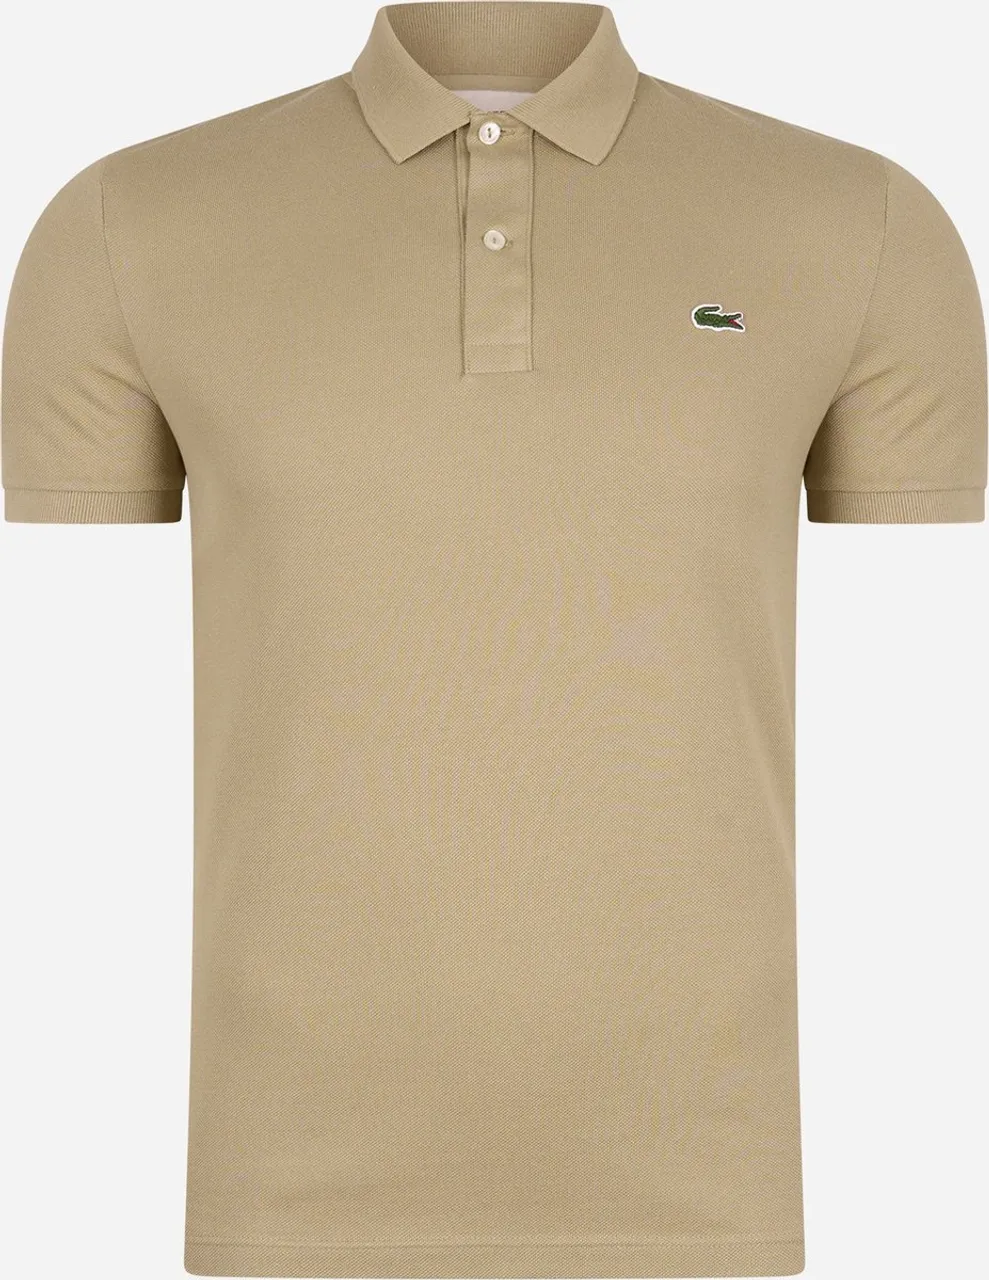 Lacoste - Poloshirt Pique Beige - Slim-fit - Heren Poloshirt